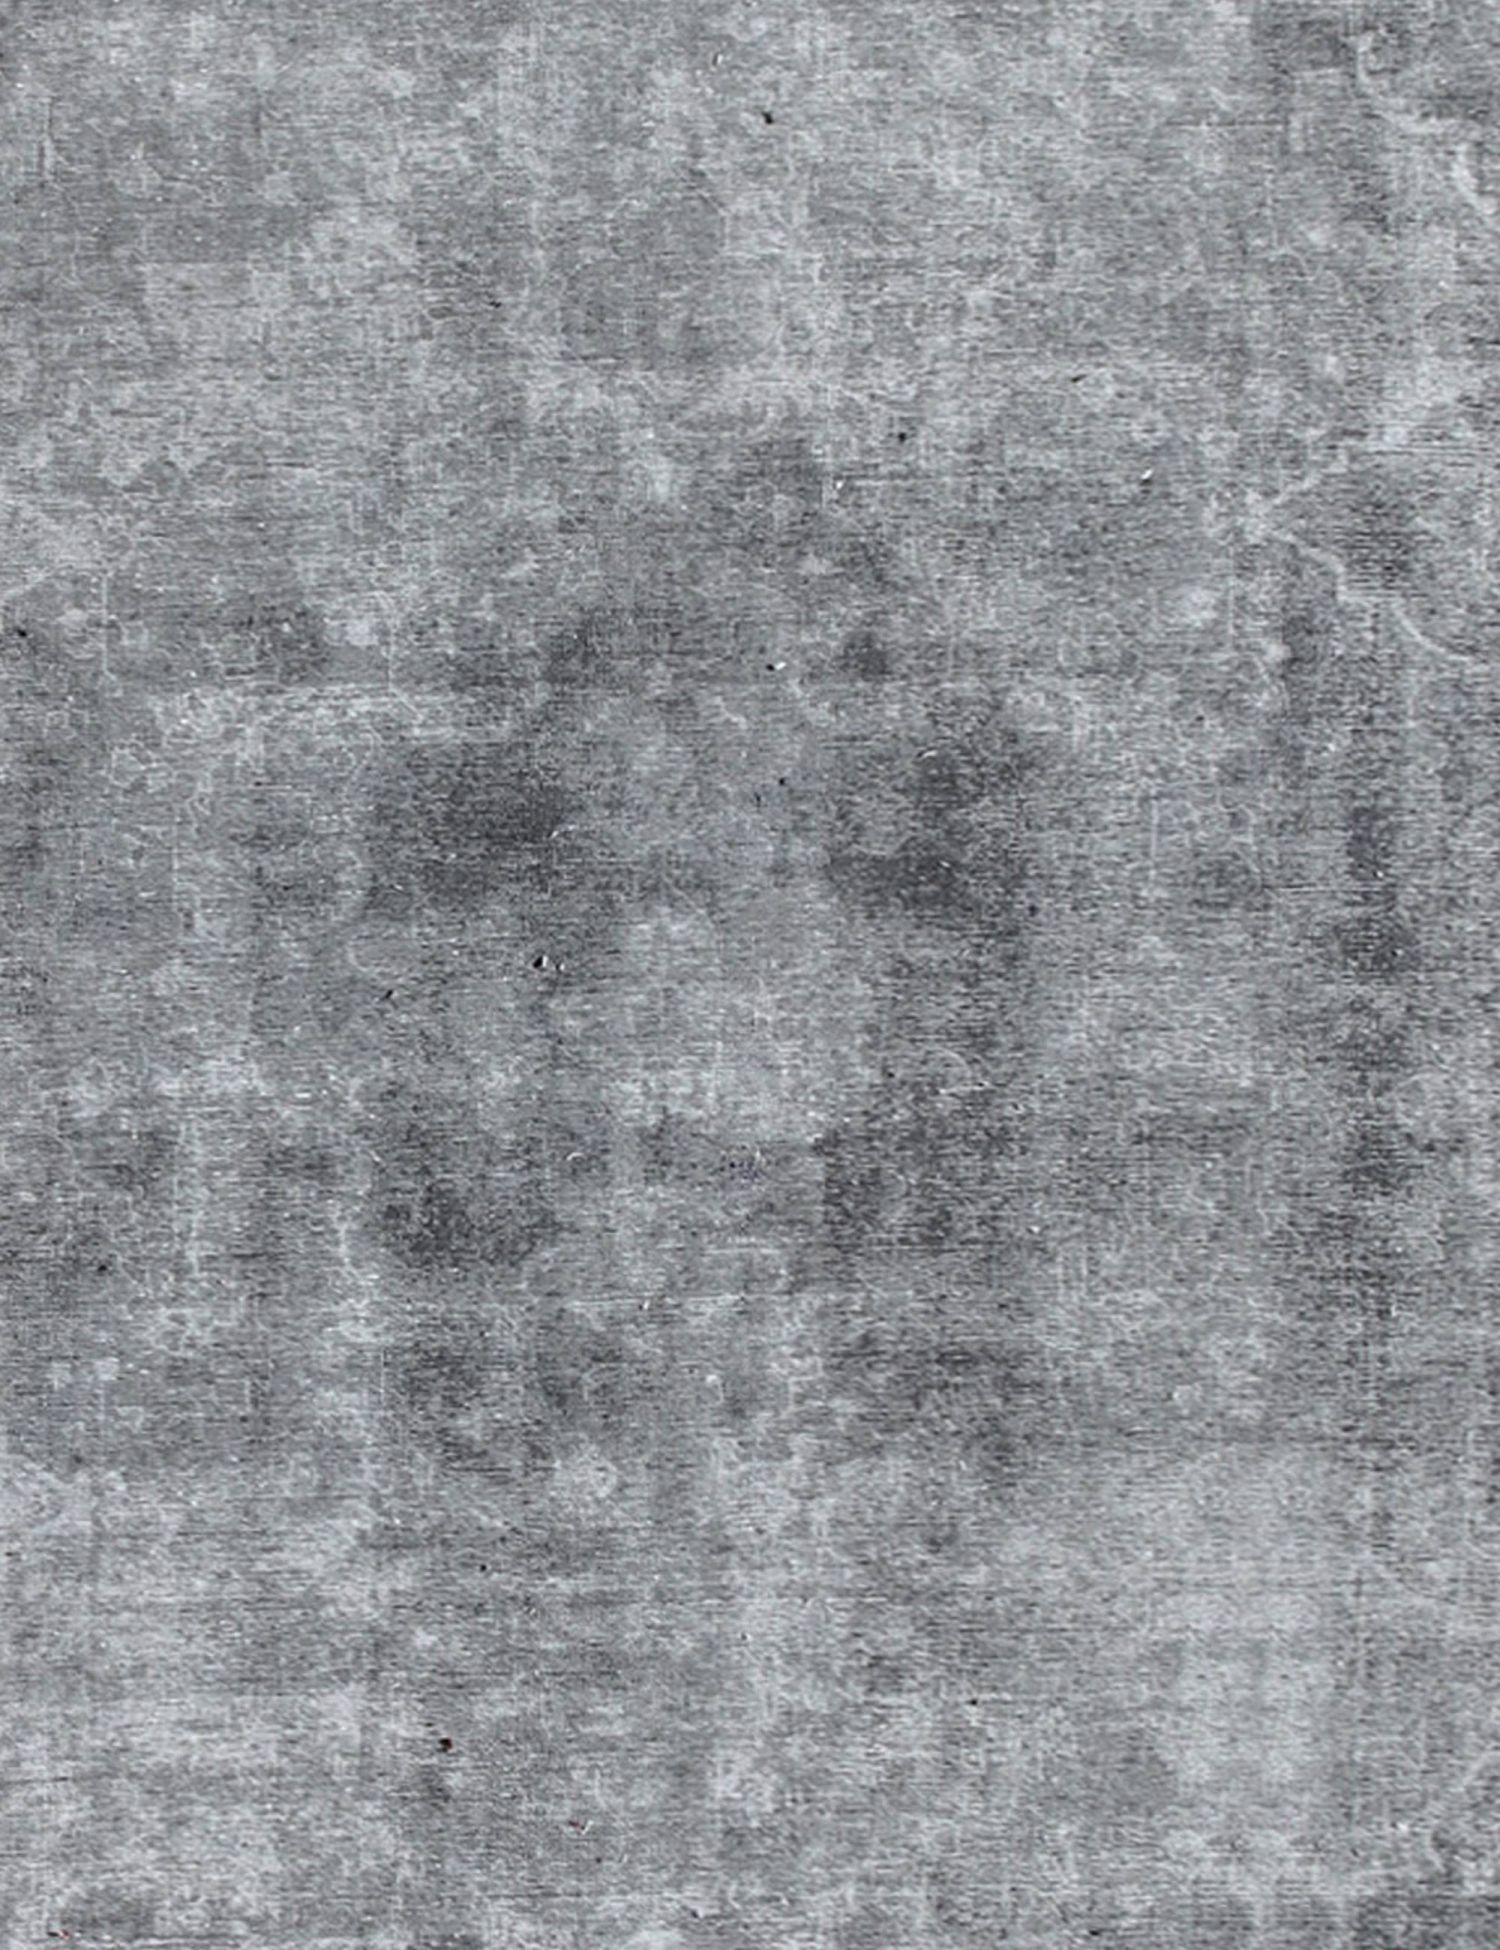 Persian Vintage Carpet  grey <br/>340 x 240 cm